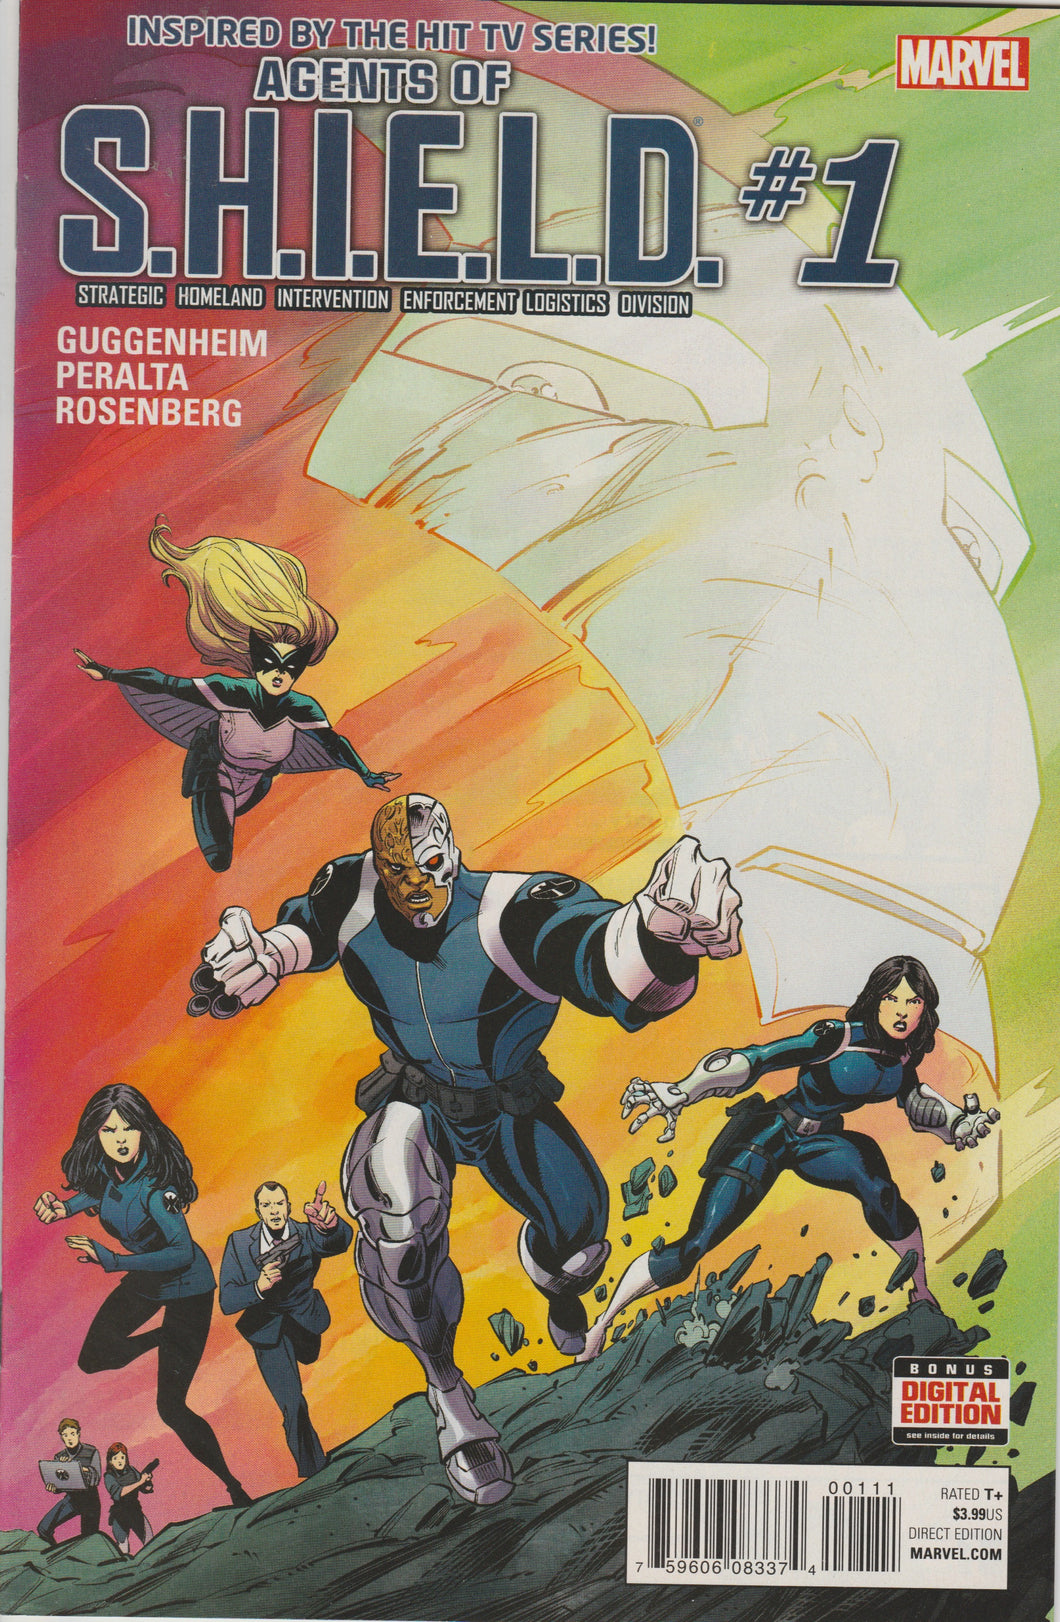 Agents of S.H.I.E.L.D. #1 standard cover